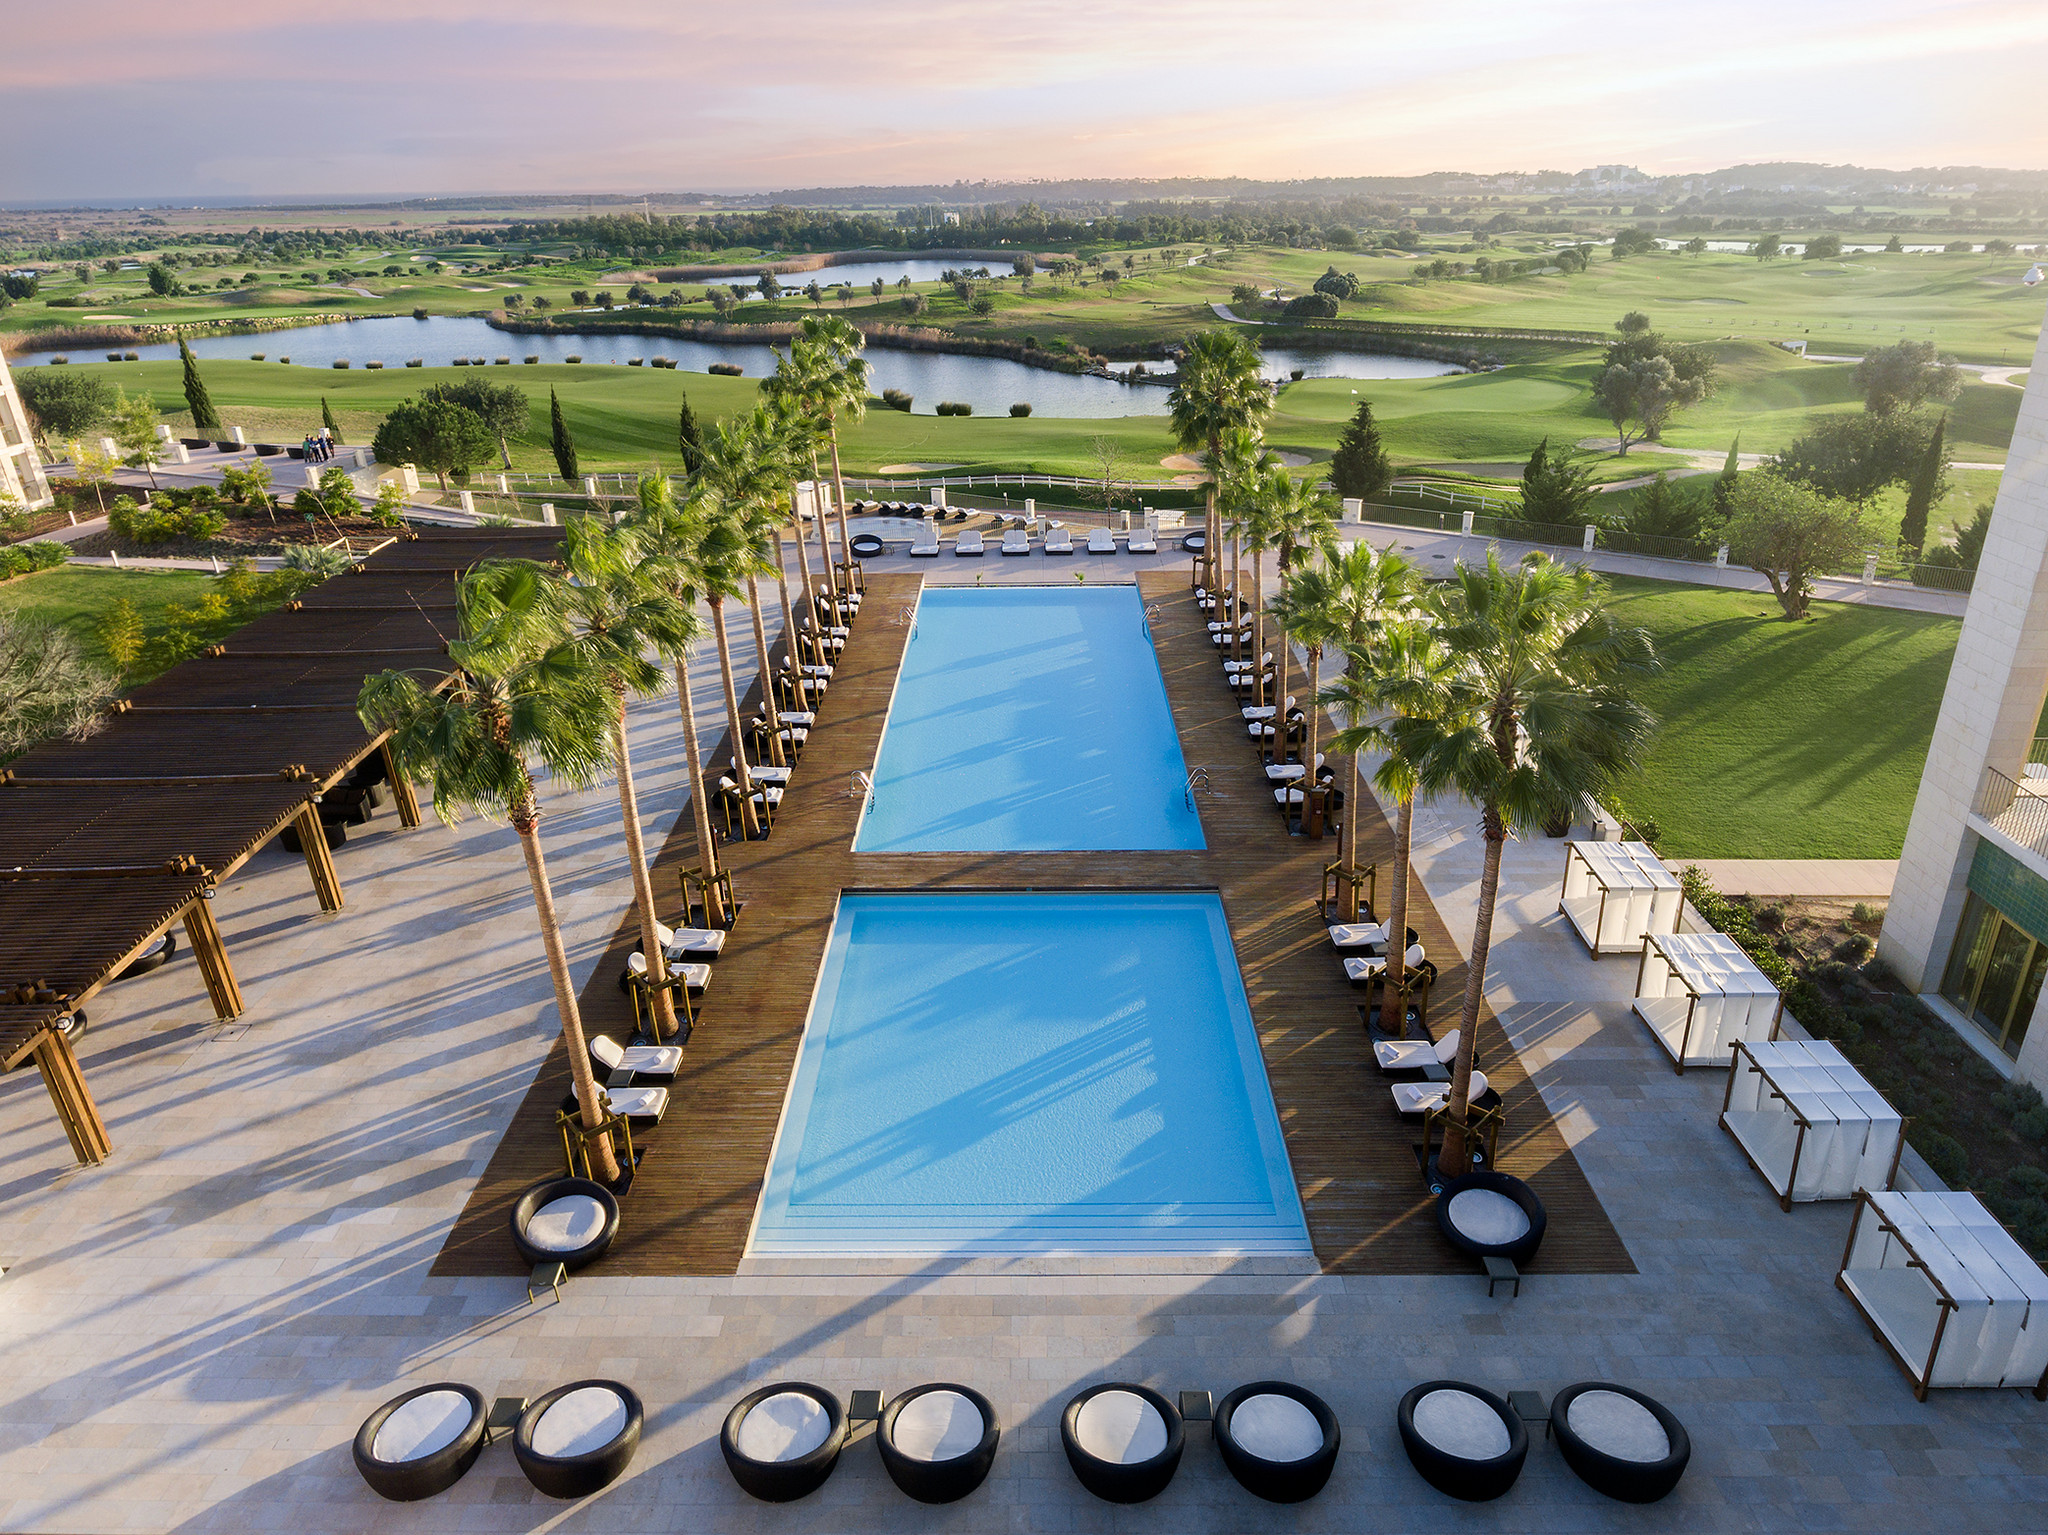 Anantara Vilamoura - main pool with golf course backdrop.jpg